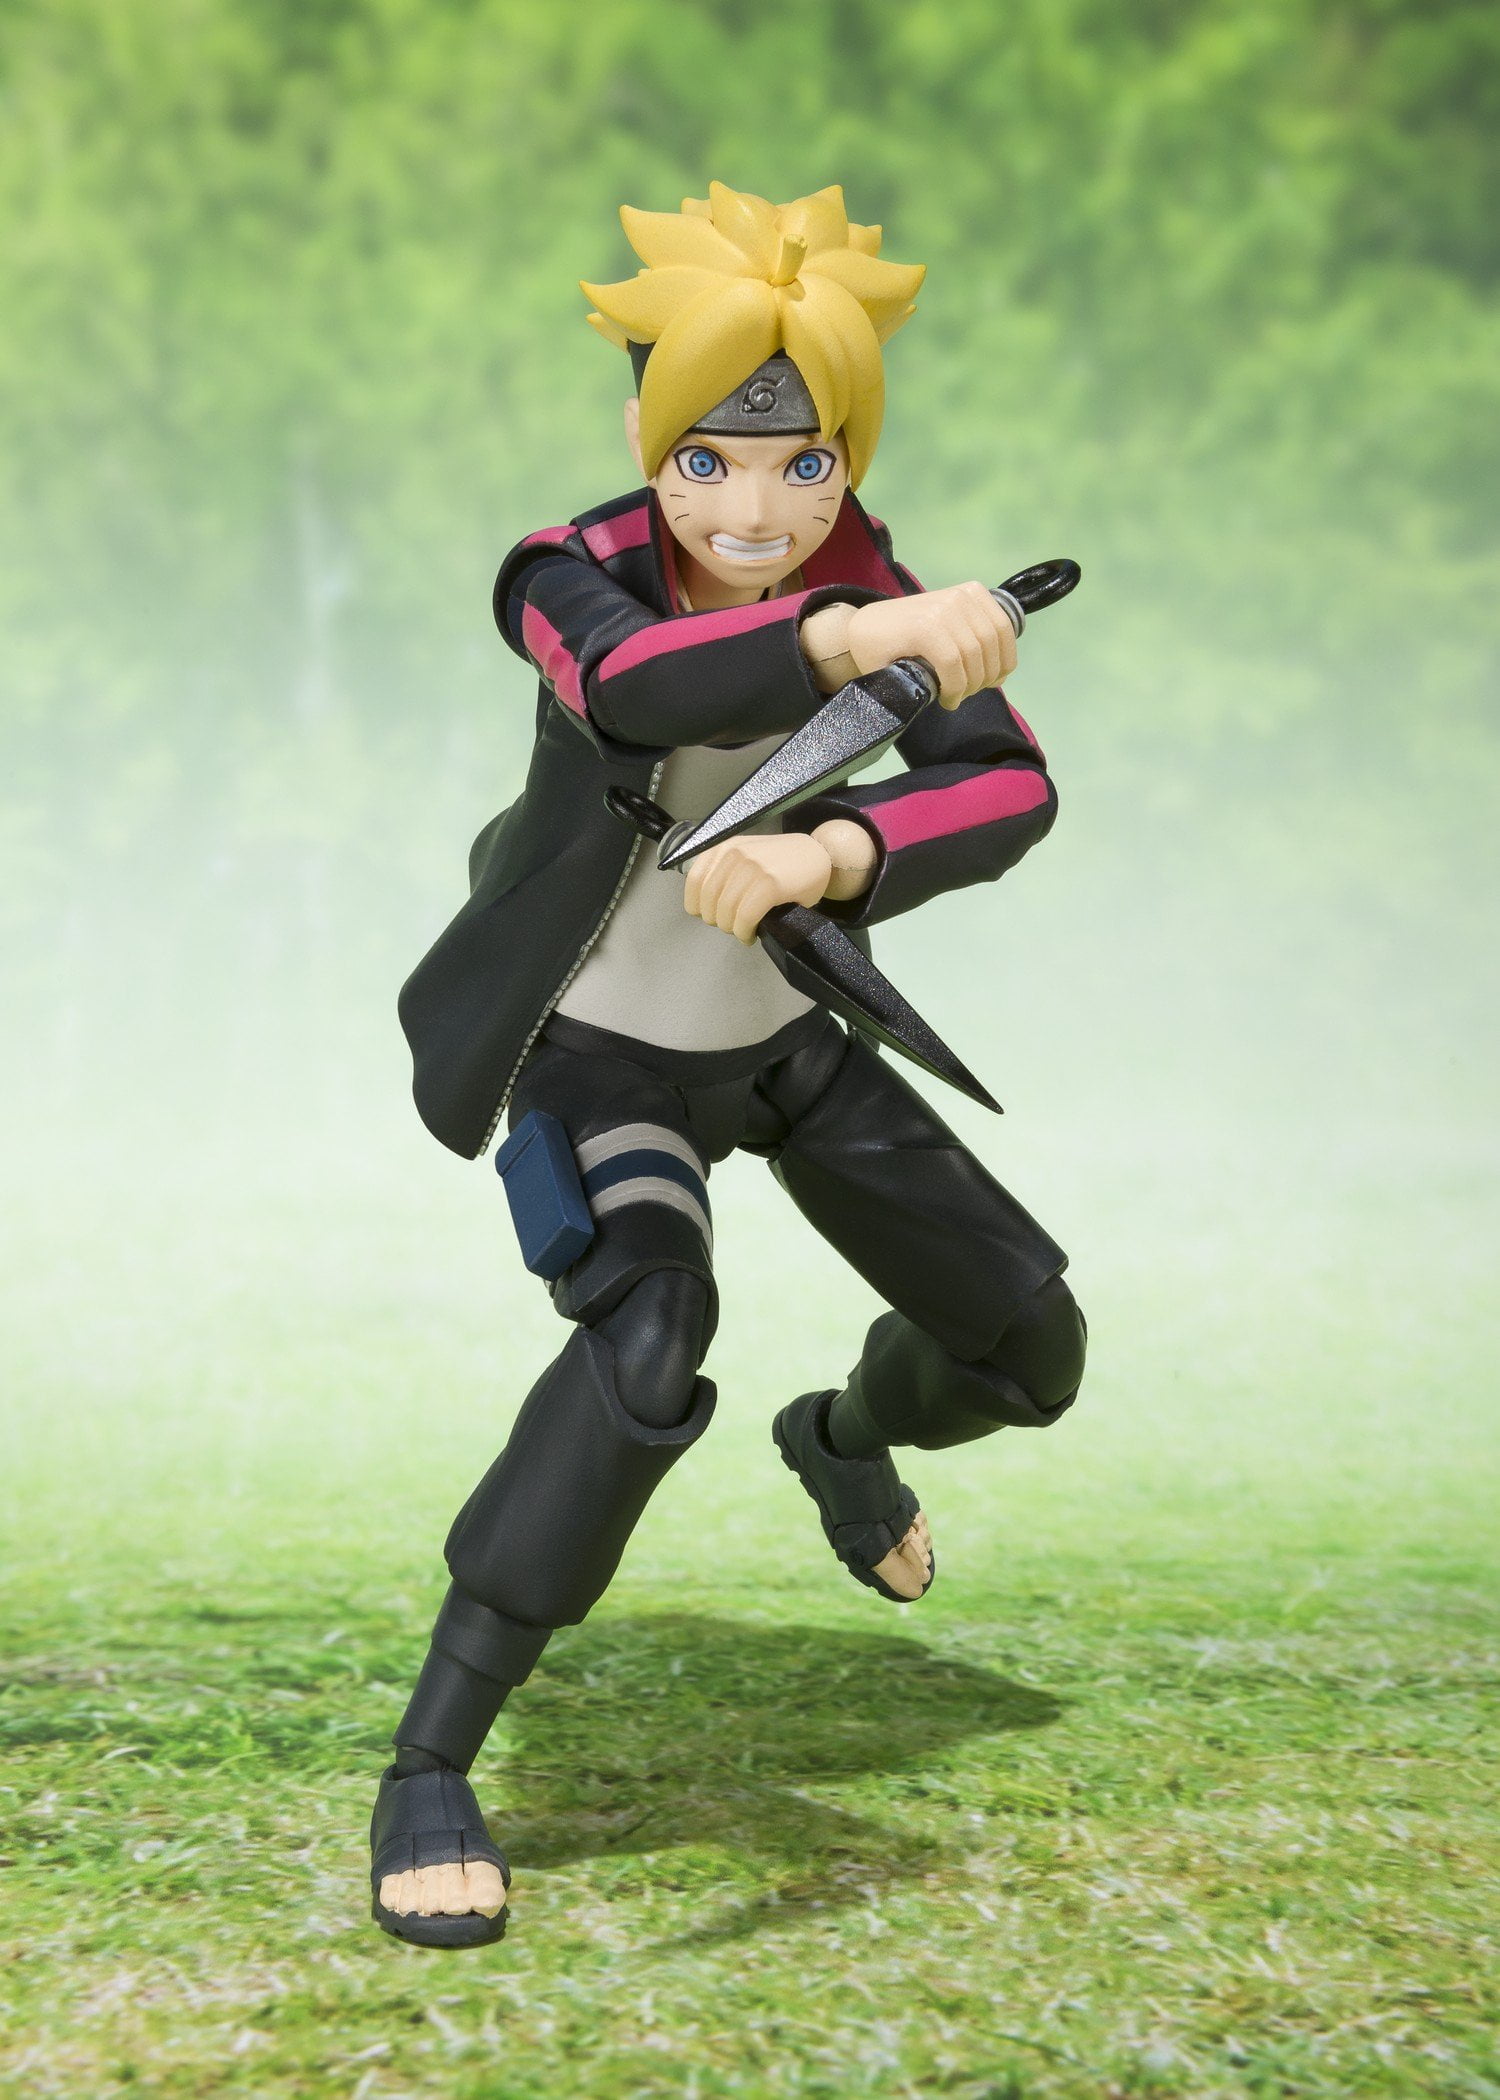 Toynami Naruto Shippuden Poseable Series 1 Action Figure Set, 7 